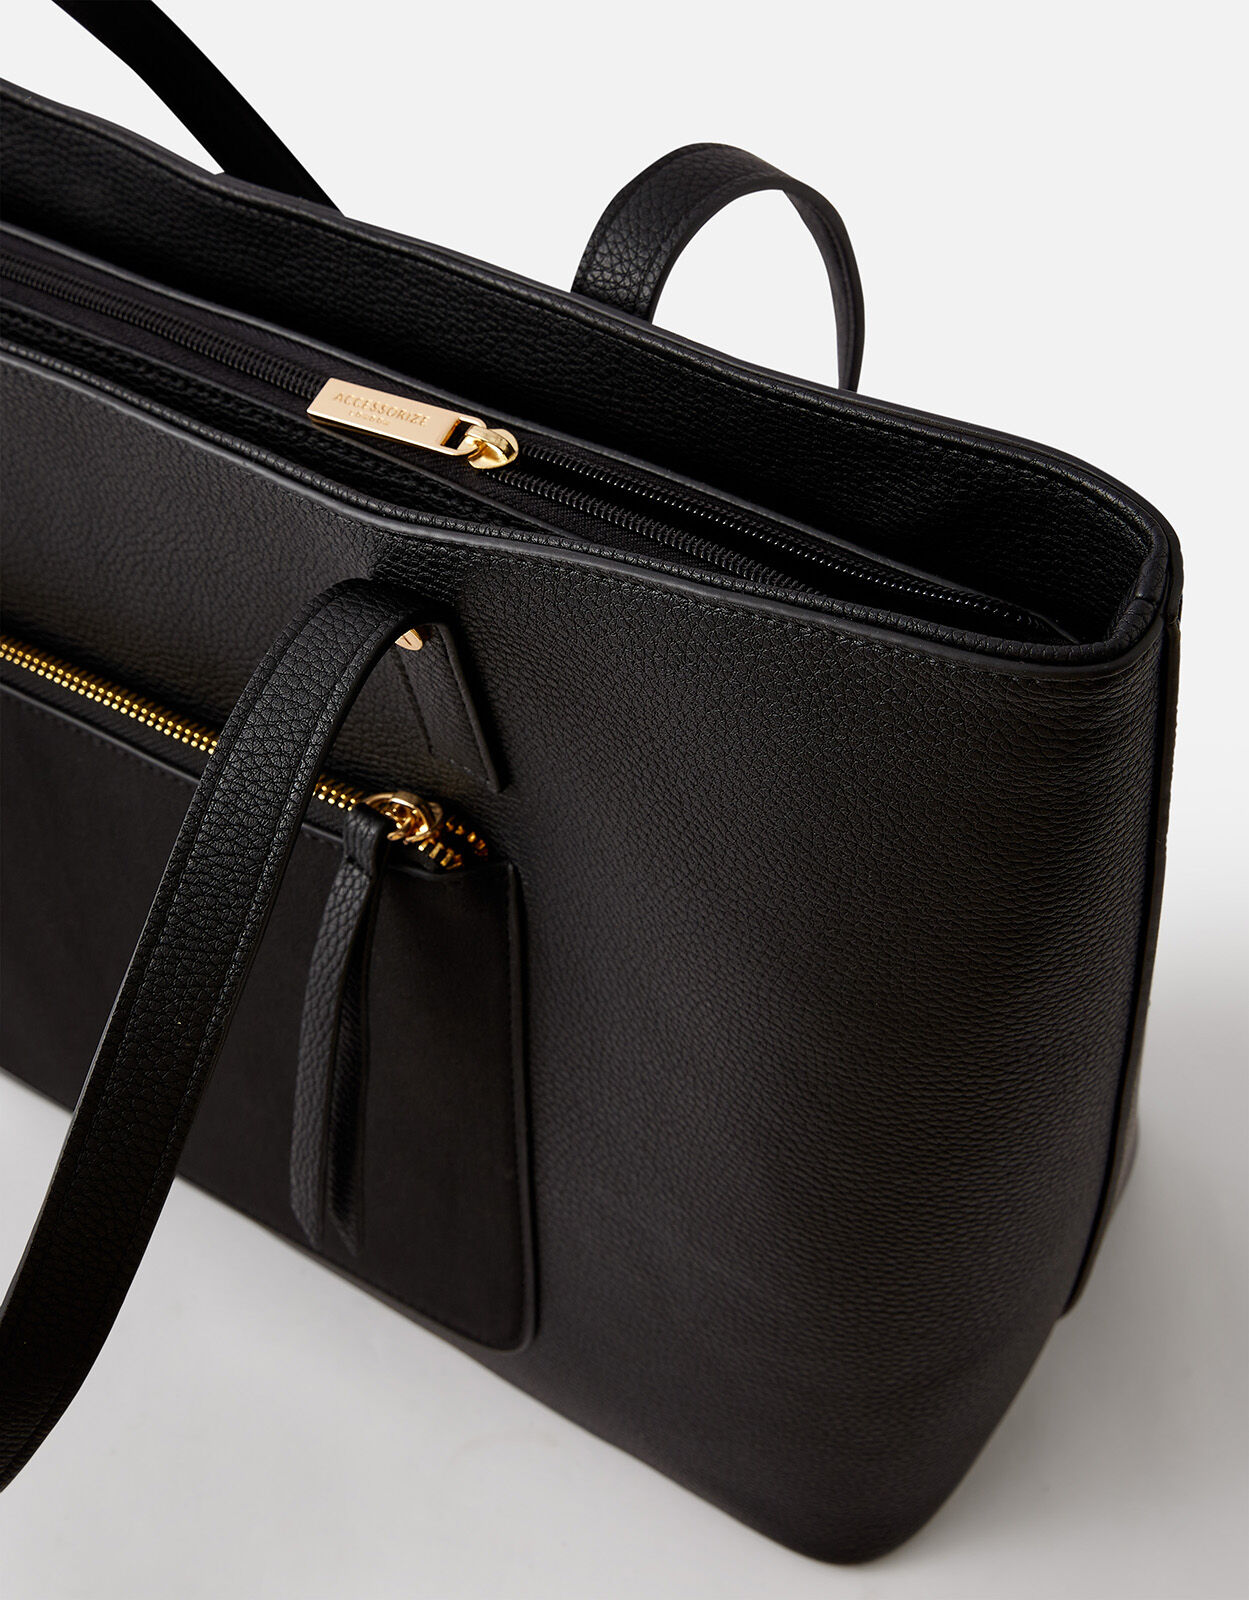 Real Leather Ladies Handbag - Women's Cross Body Black Shoulder Bag - 7Bags